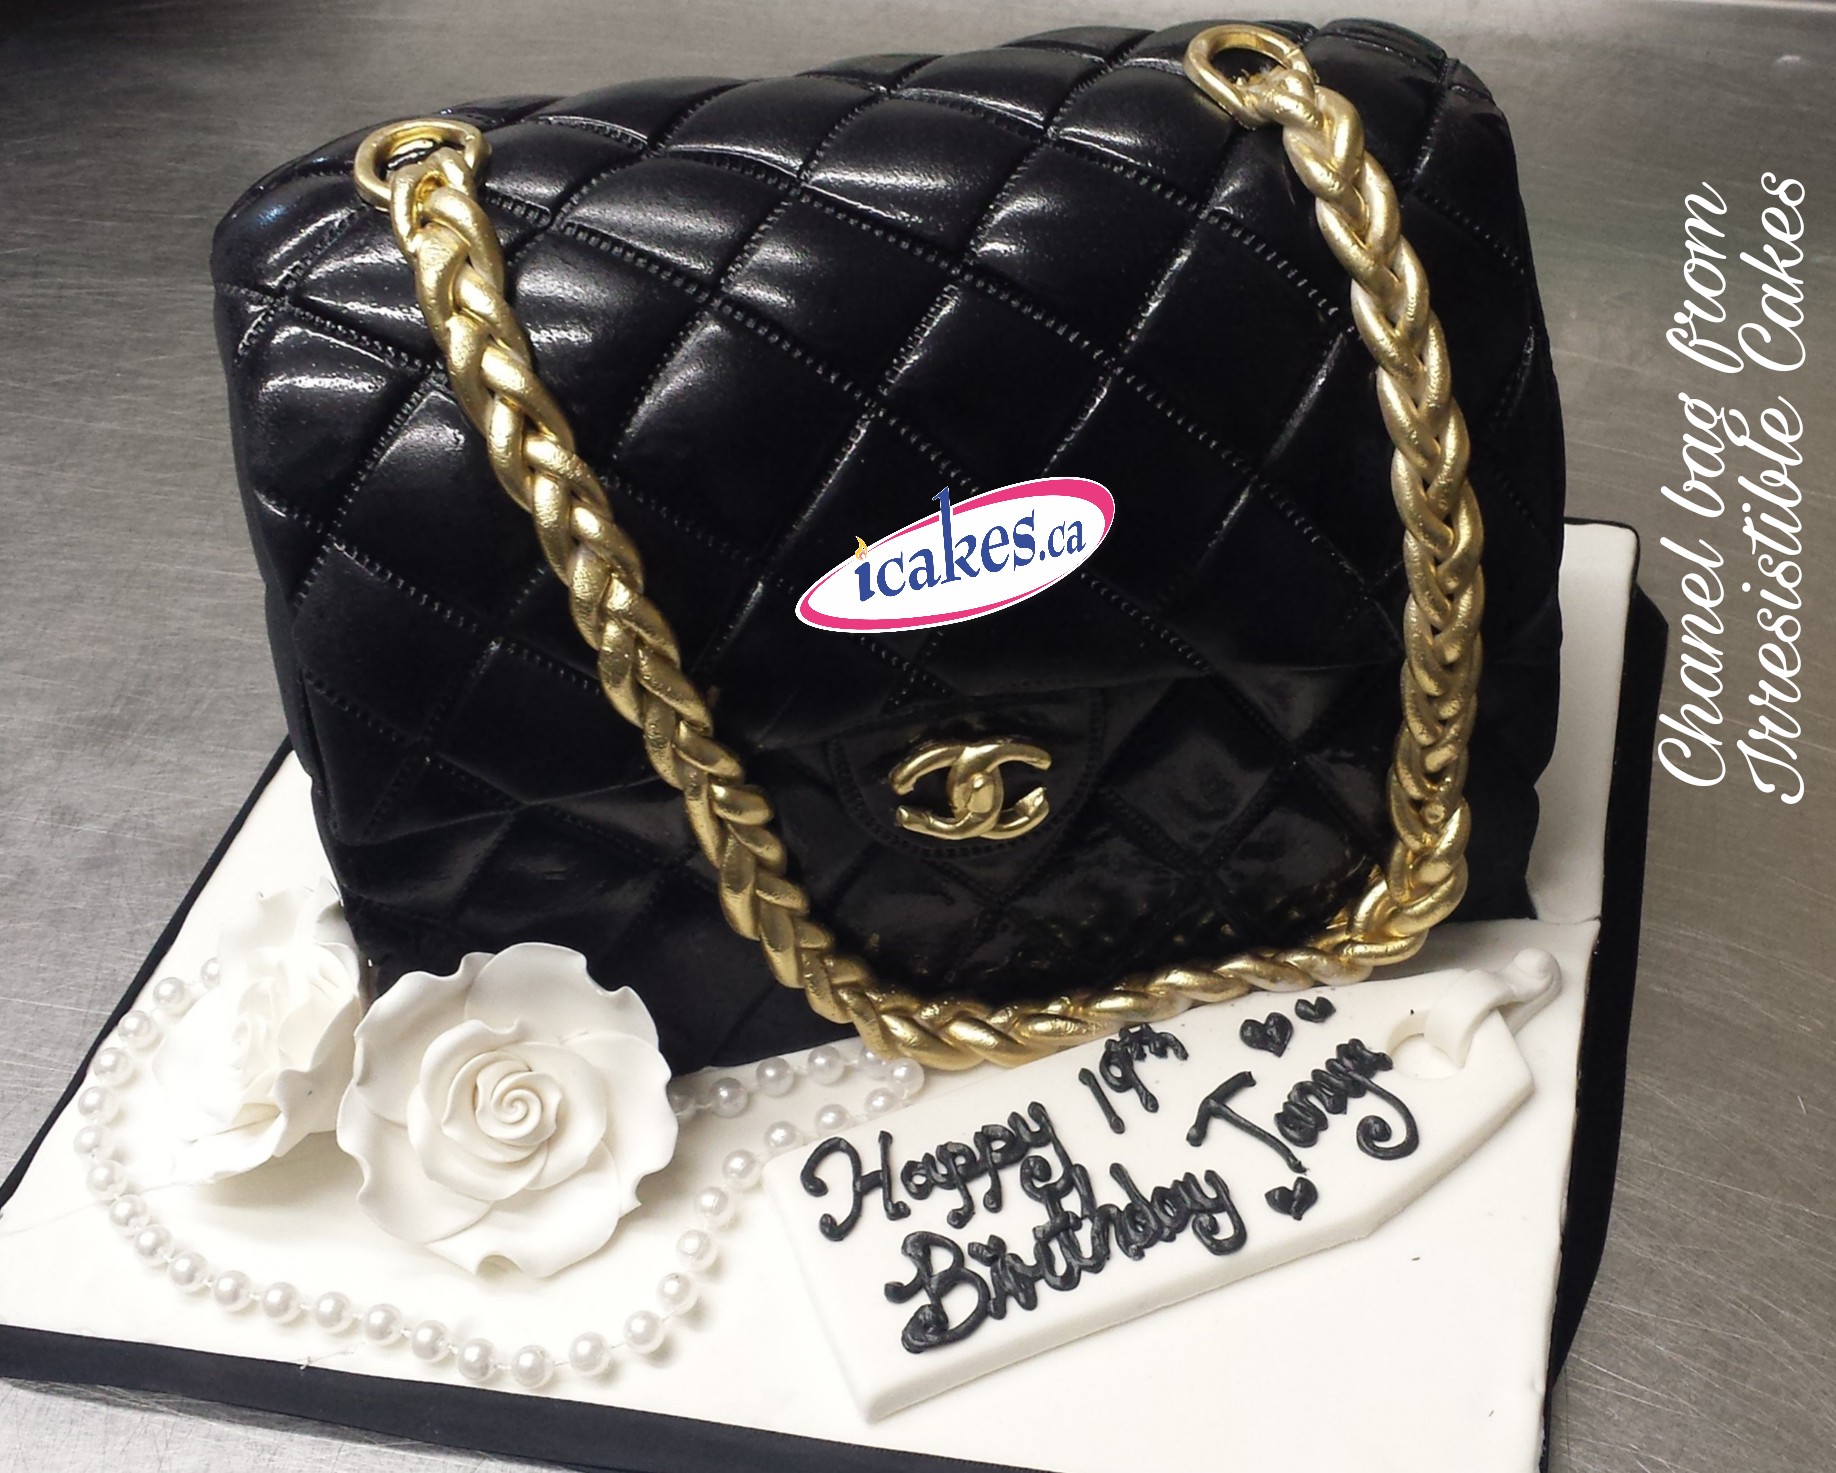 Chanel Handbag Custom Cake with Edible Fondant Beauty Accessories - CS –  Circo's Pastry Shop